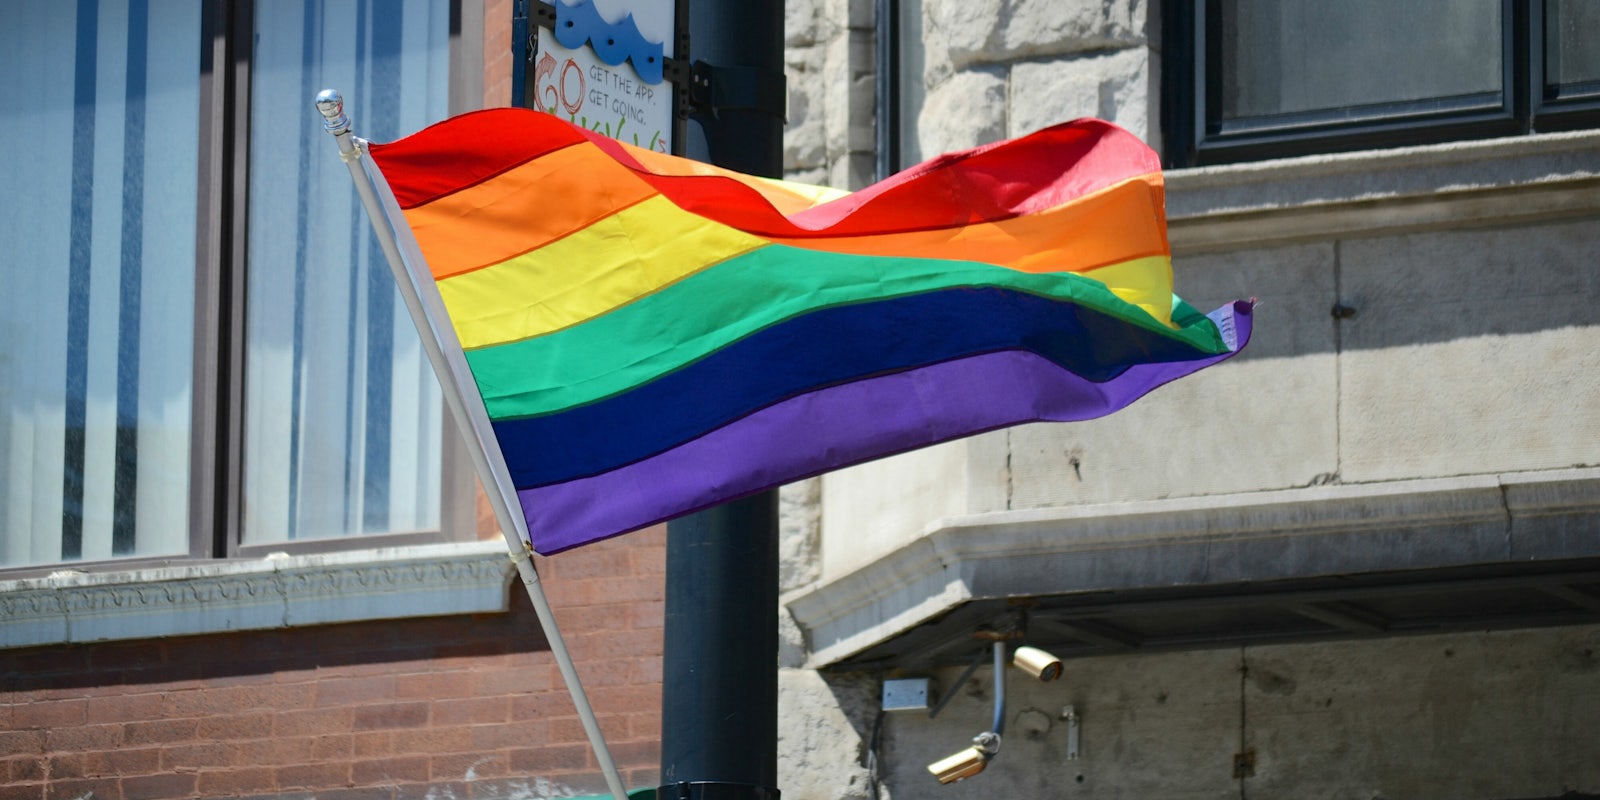 The rainbow flag represents the LGBTQ community.